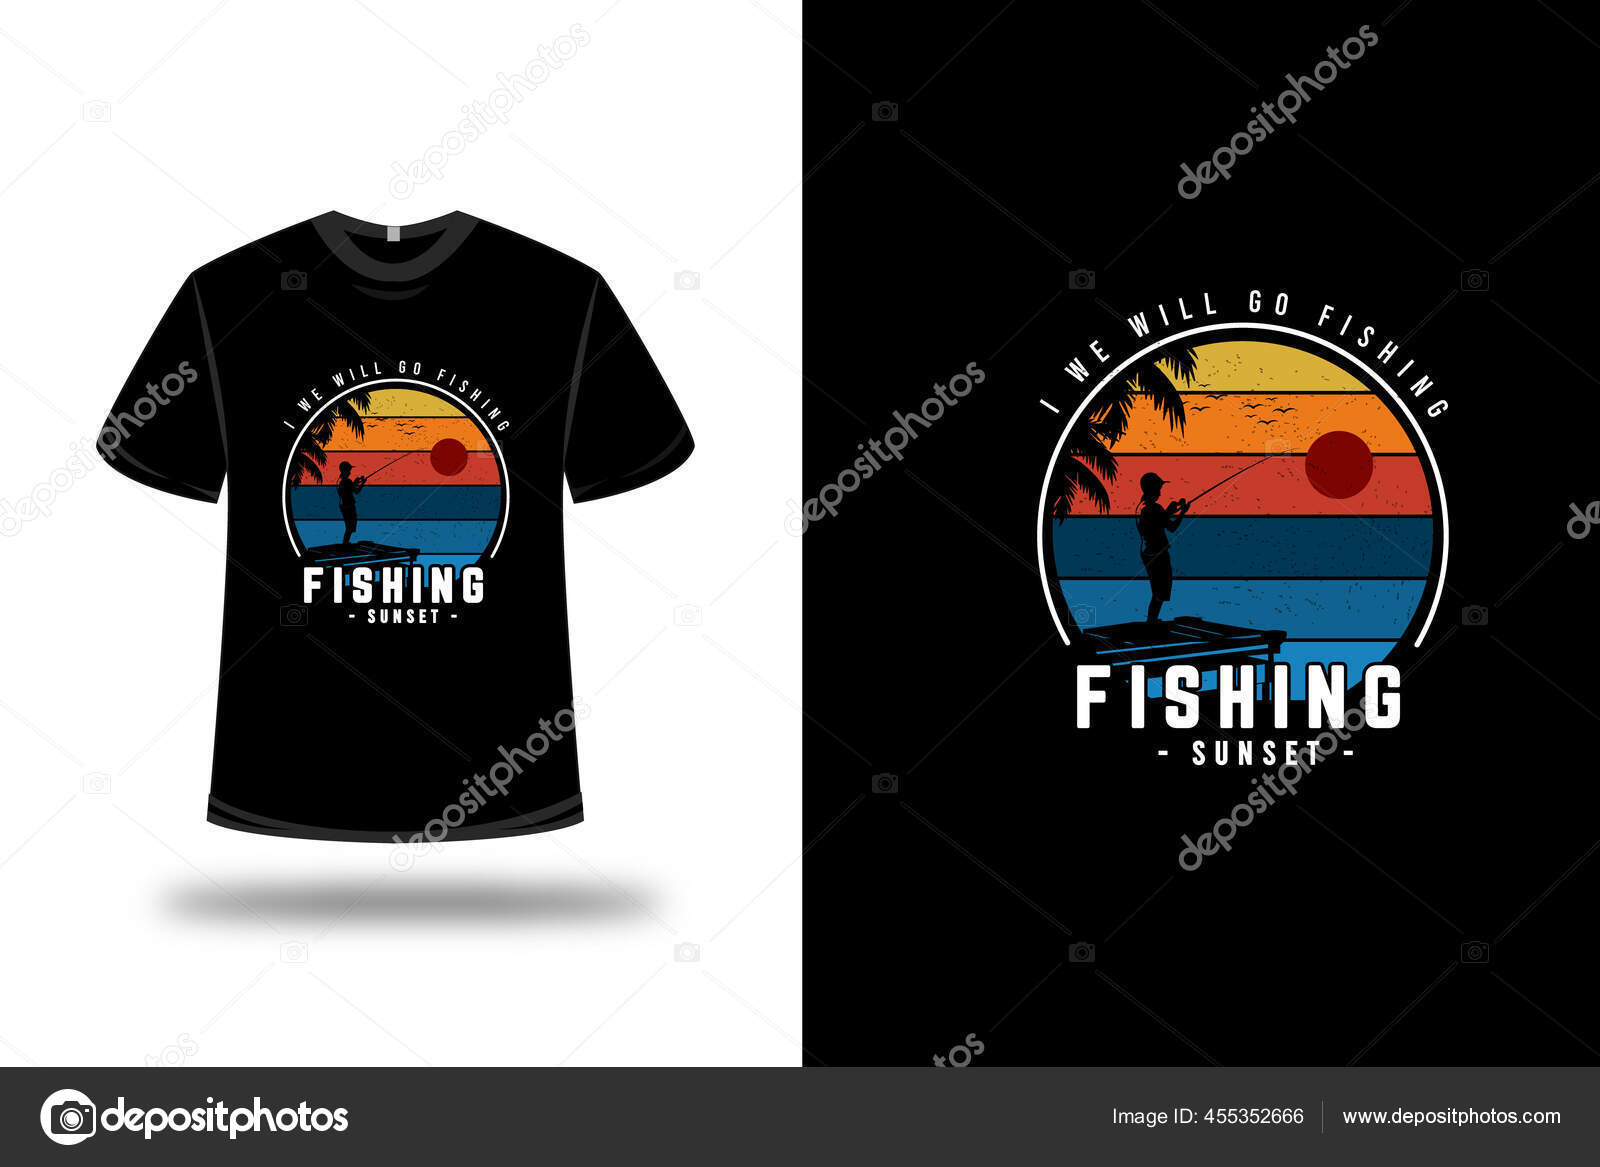 100,000 Fishing t shirt Vector Images